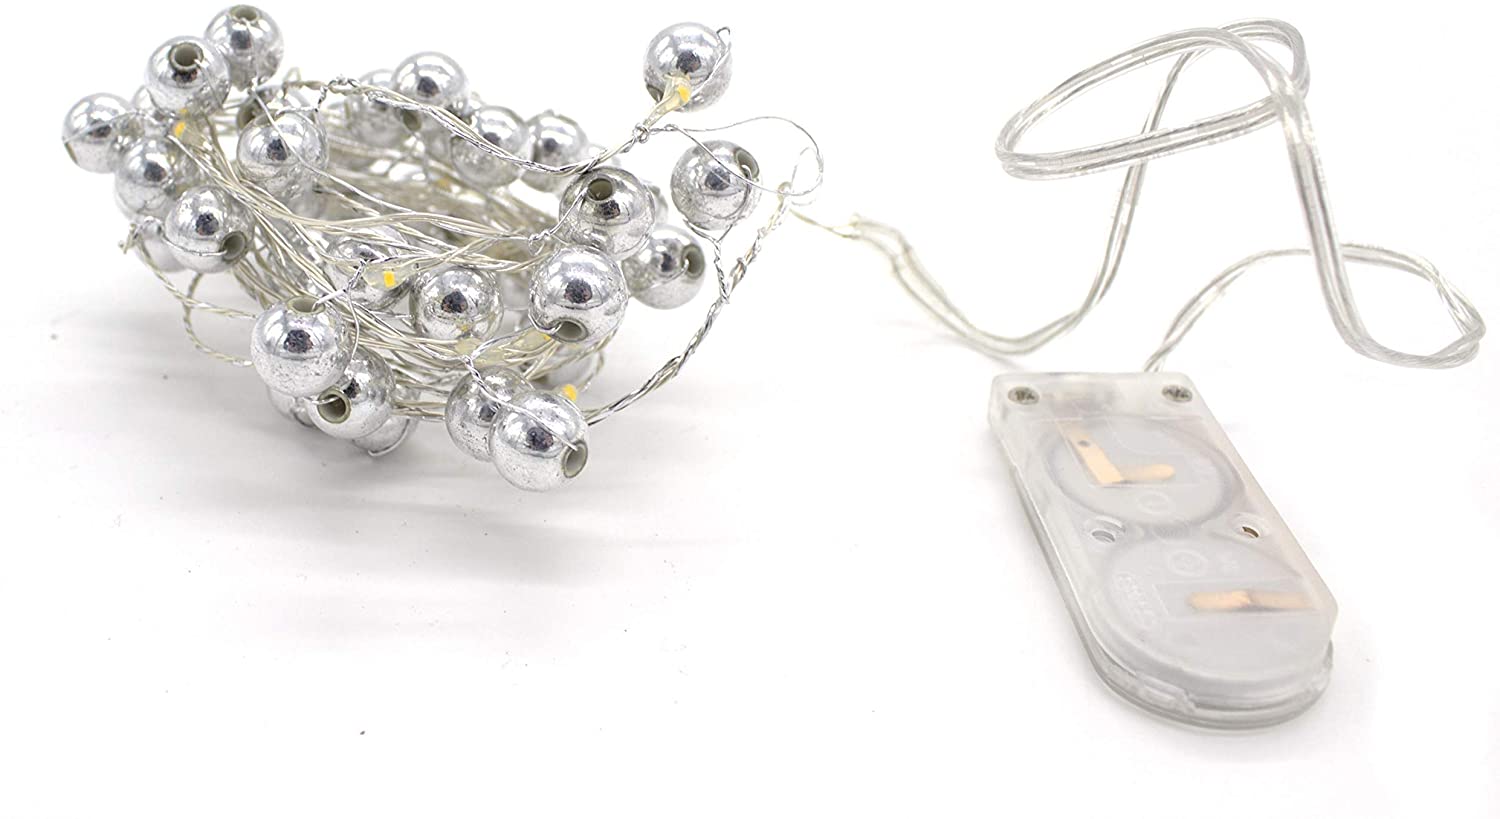 Daro Decorative Pearl Fairy Lights 20 Mini Leds Warm White